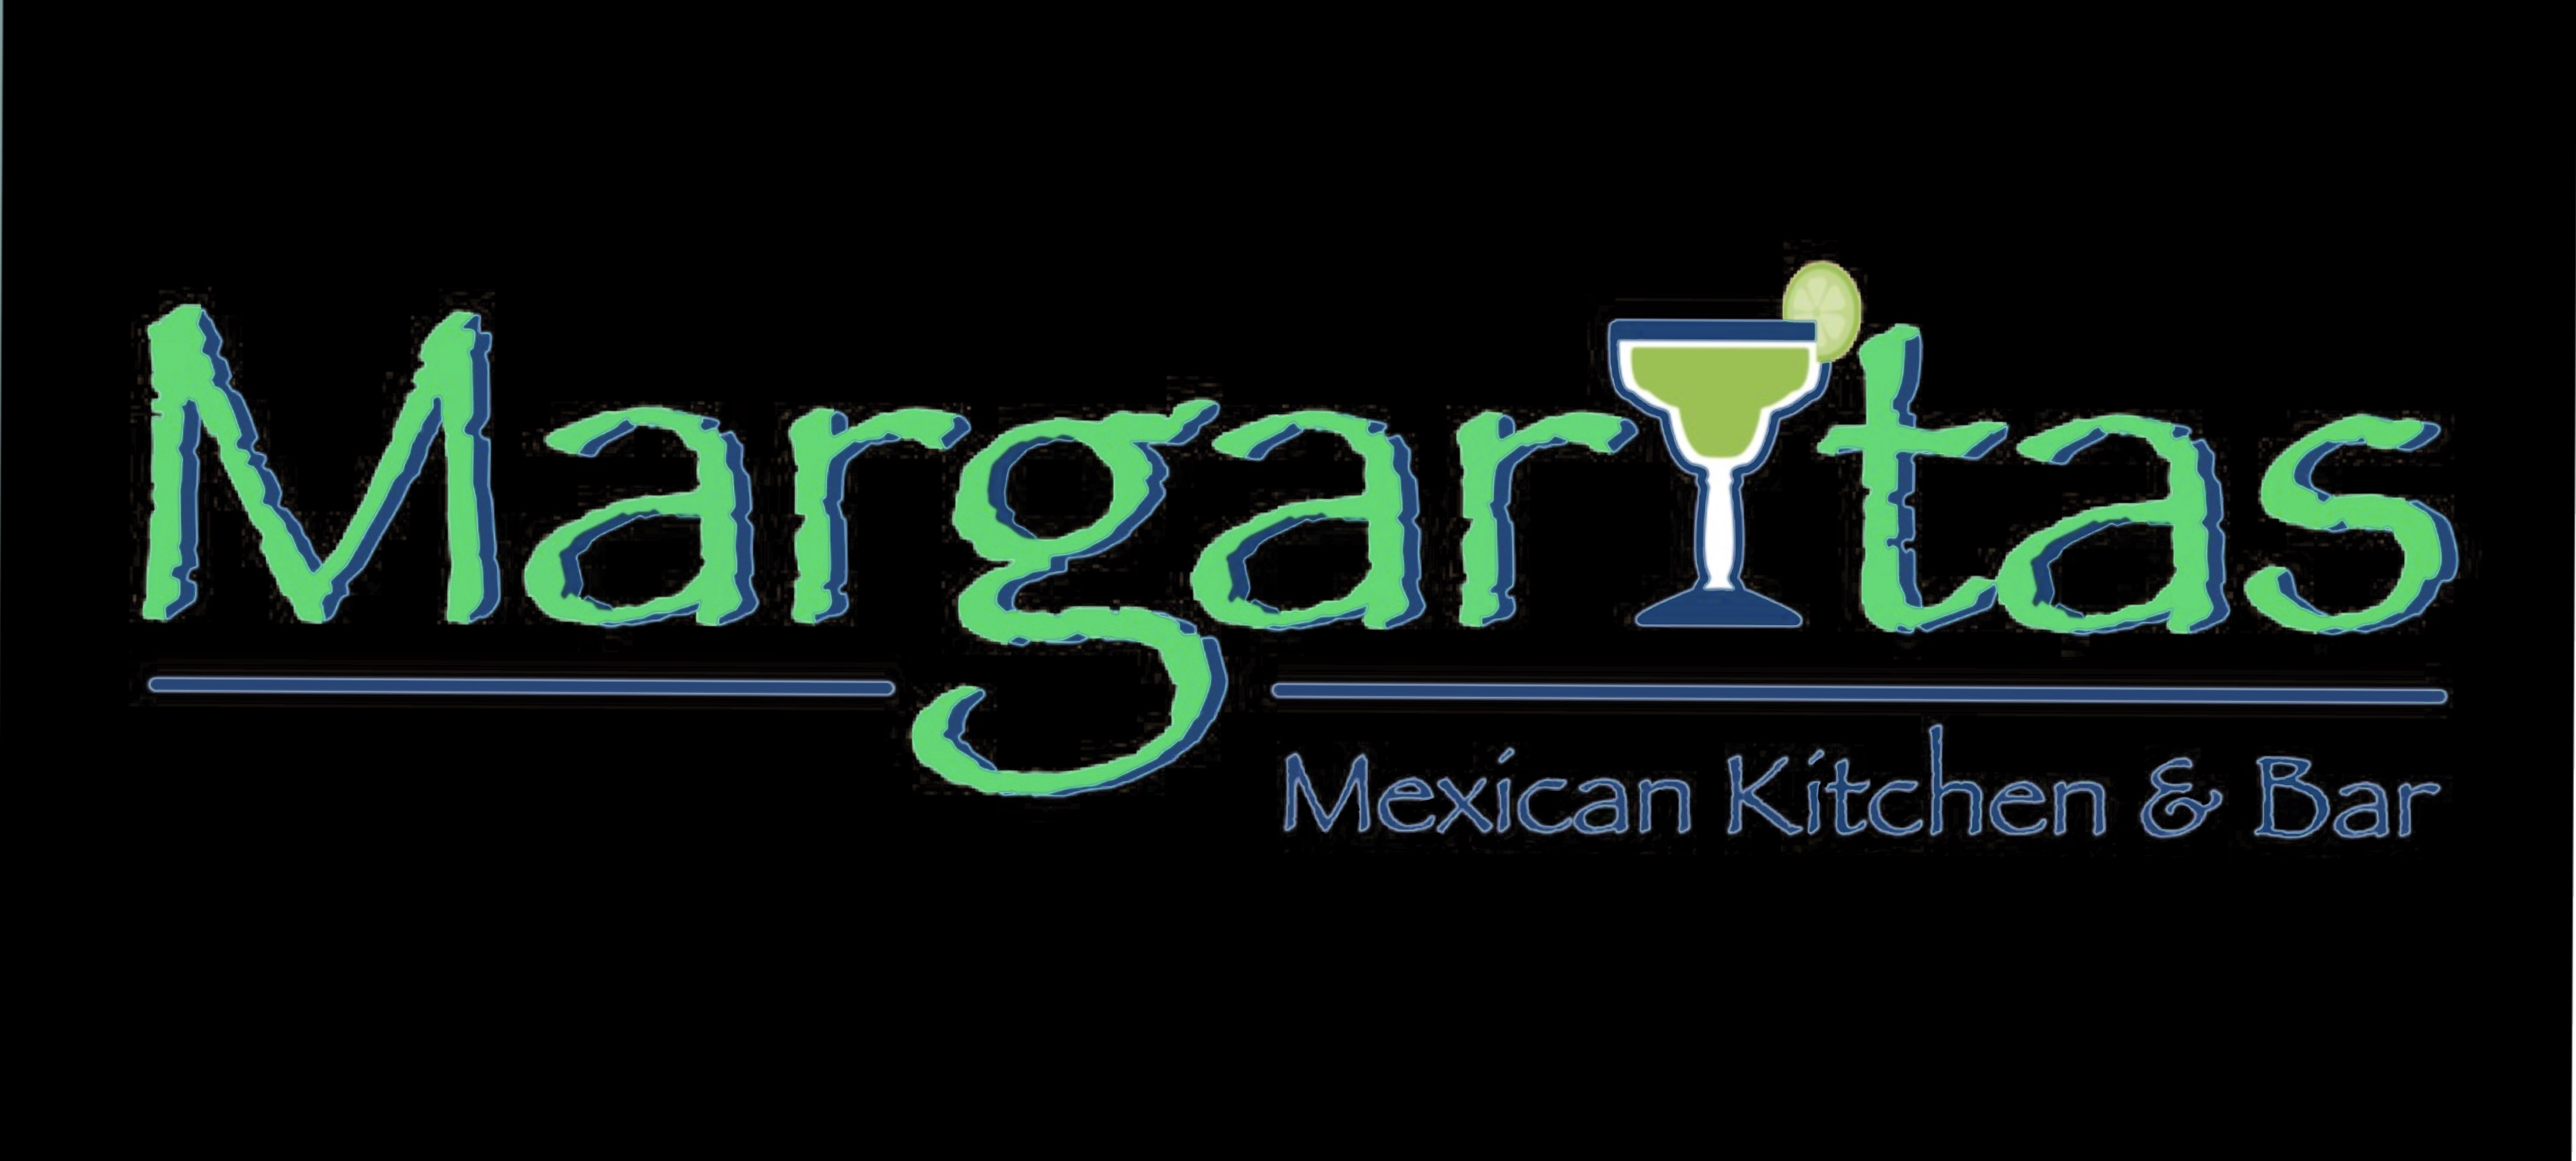 Margaritas logo.jpg